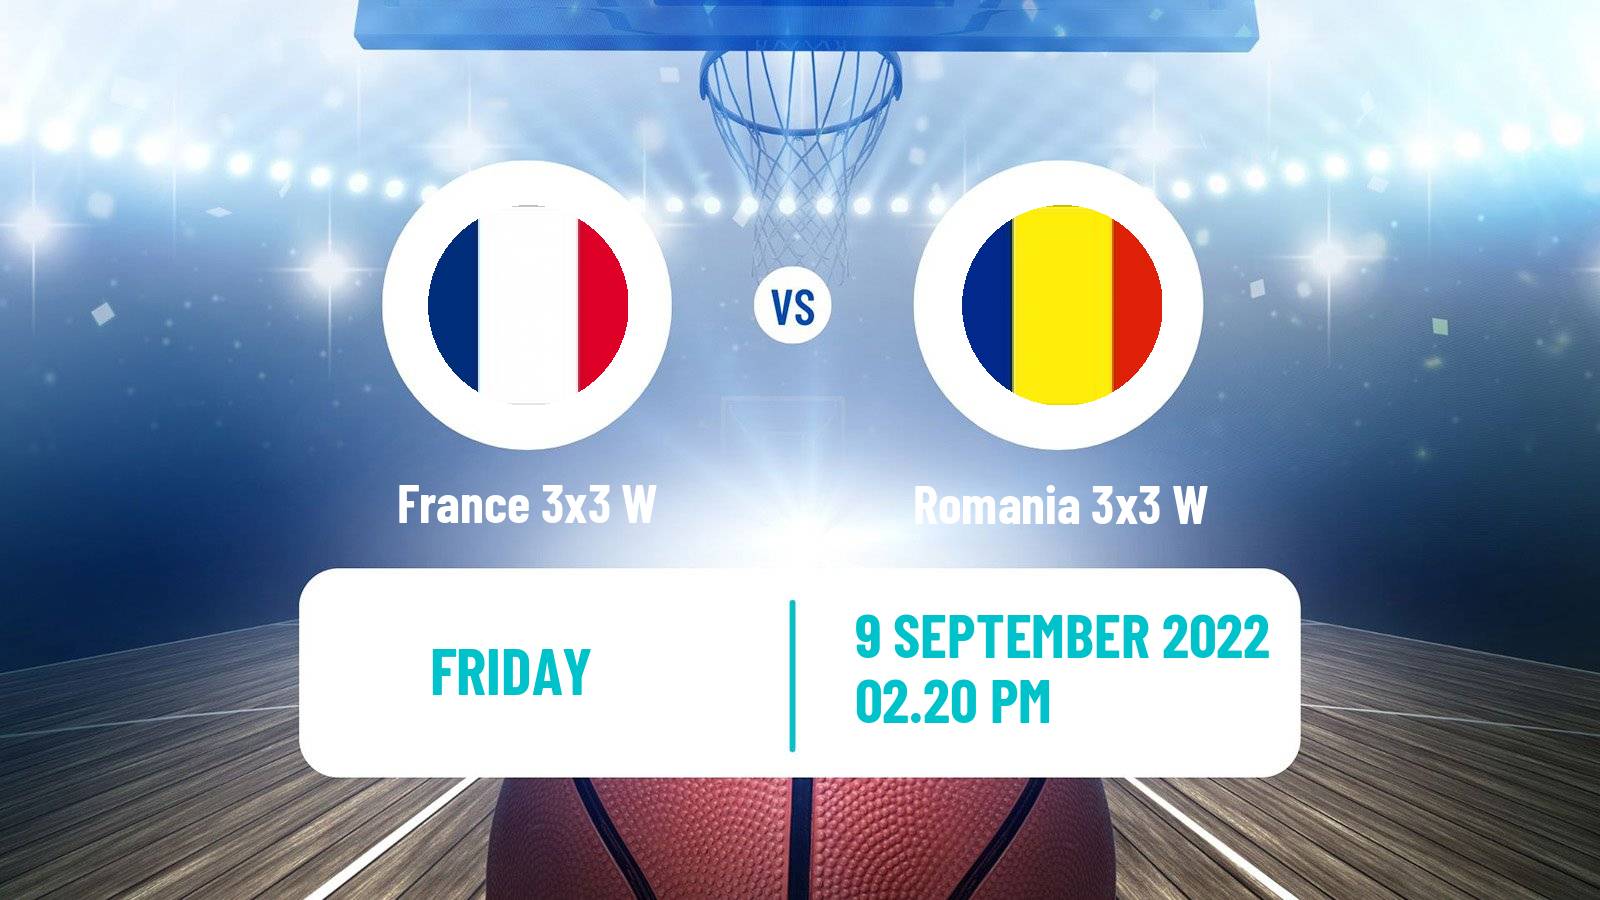 Basketball Europe Cup Basketball 3x3 Women France 3x3 W - Romania 3x3 W